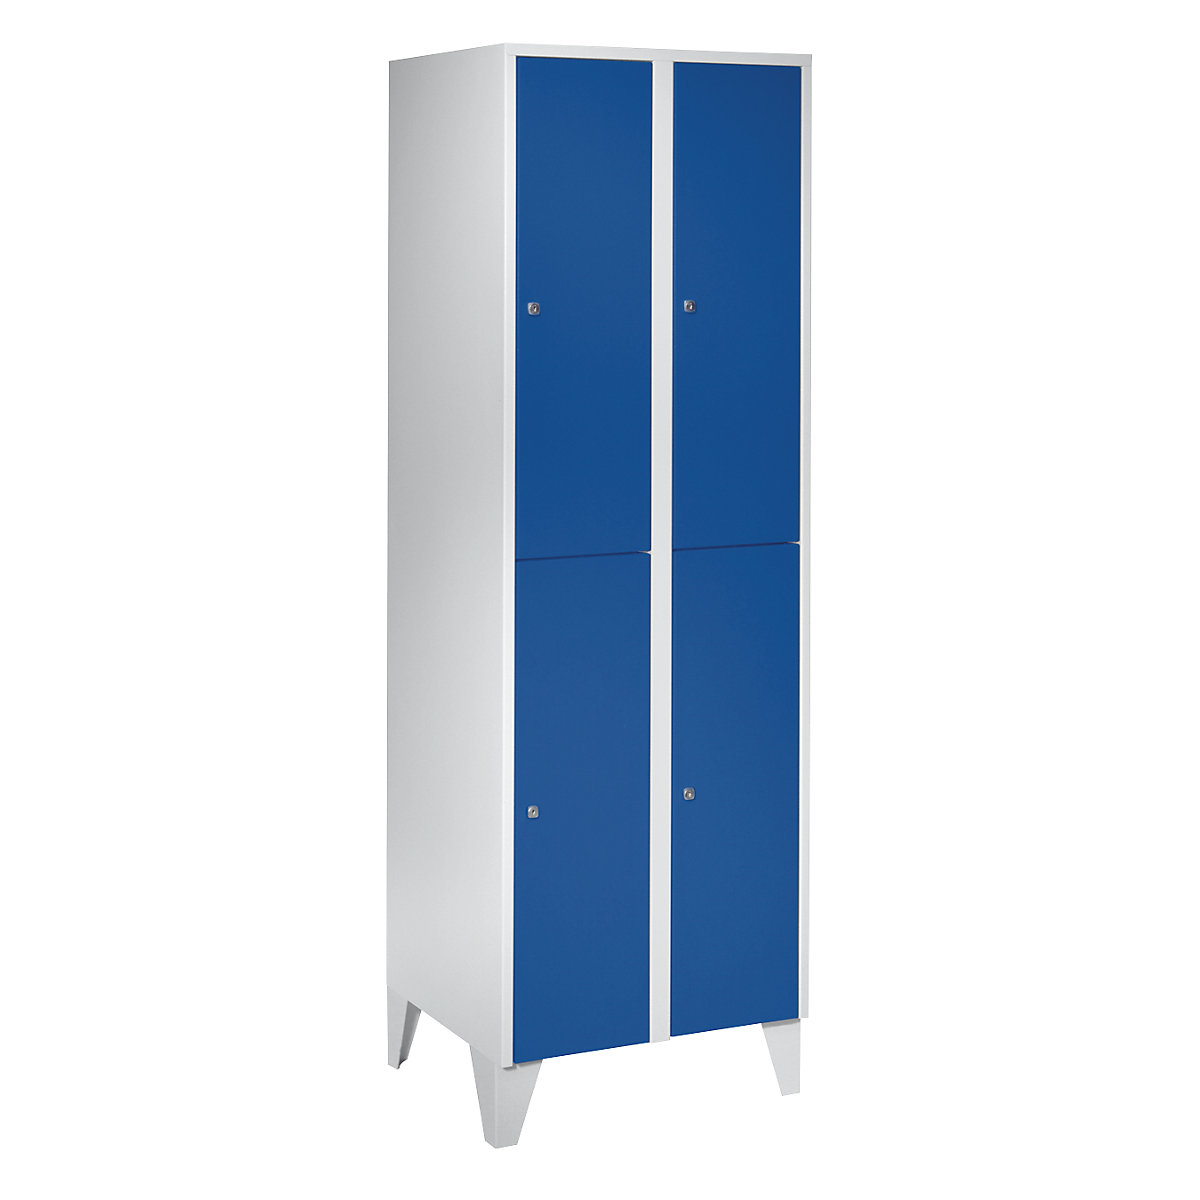 Cloakroom locker with feet – Wolf, HxWxD 1850 x 600 x 500 mm, 4 compartments, gentian blue-7